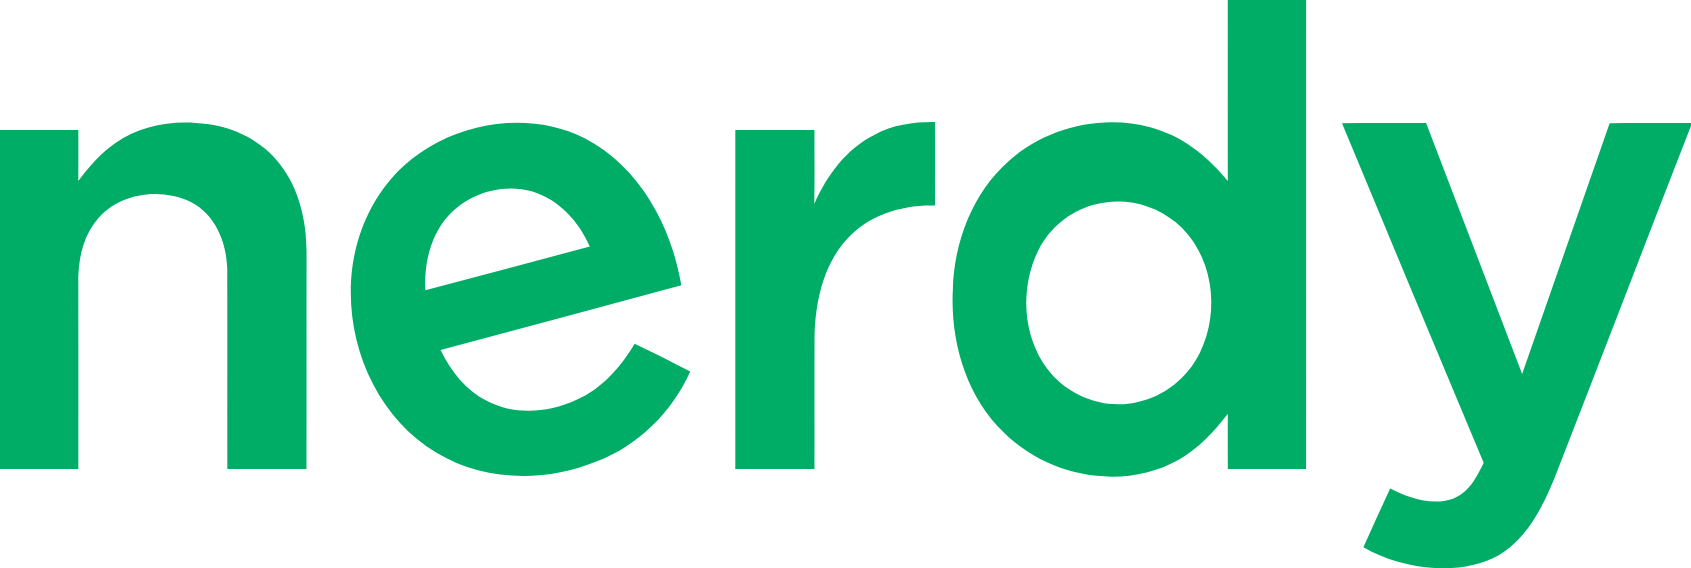 Nerdy logo large (transparent PNG)